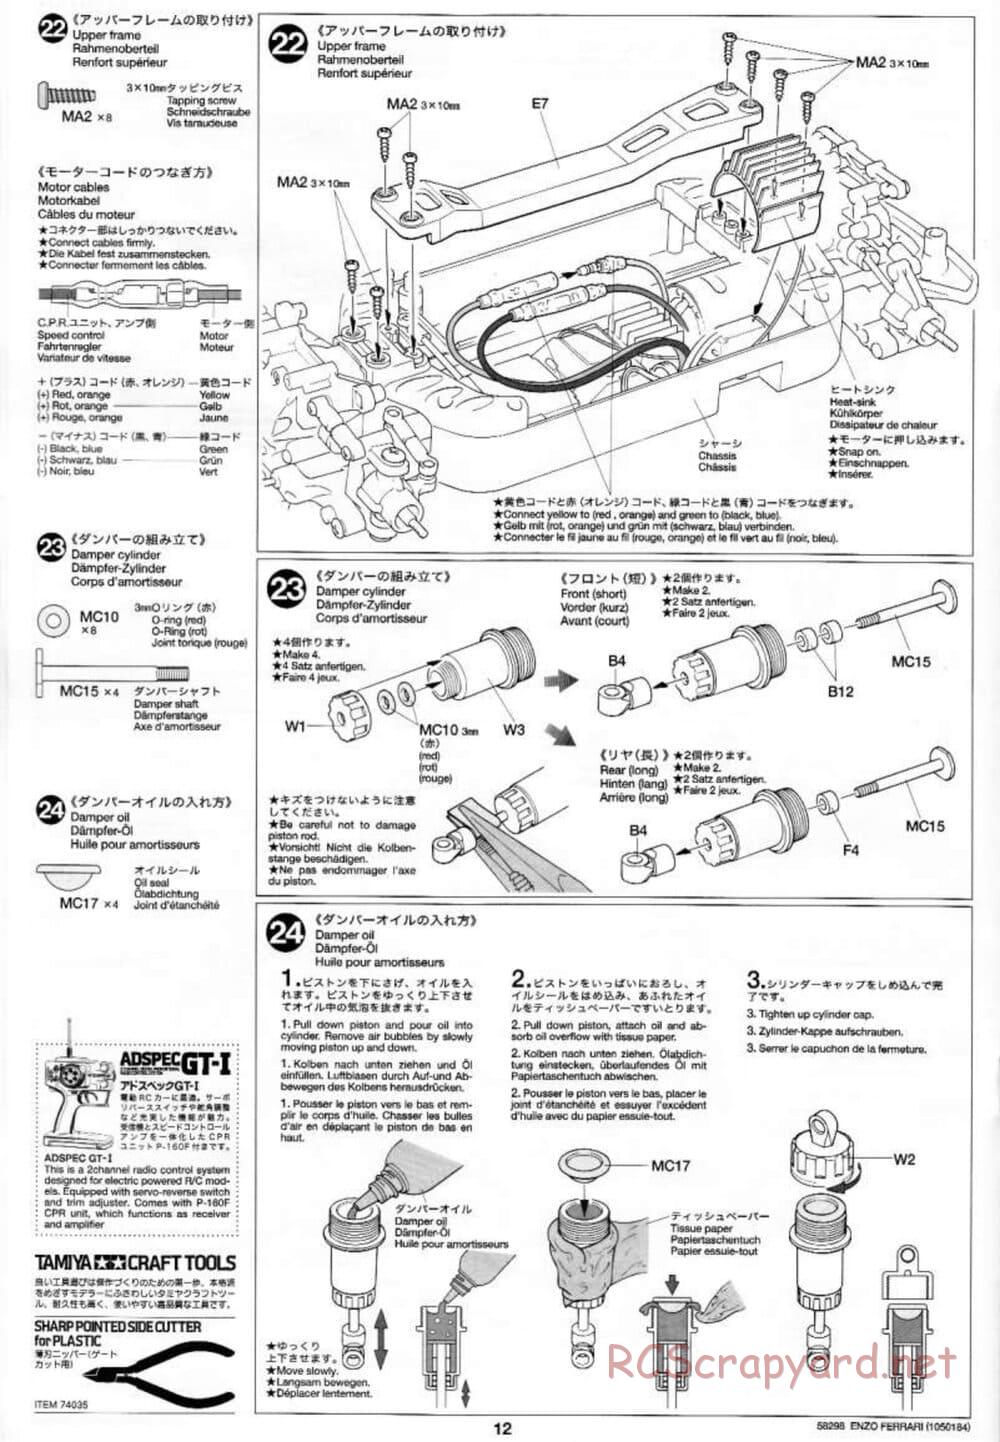 Tamiya - Enzo Ferrari - TB-01 Chassis - Manual - Page 12